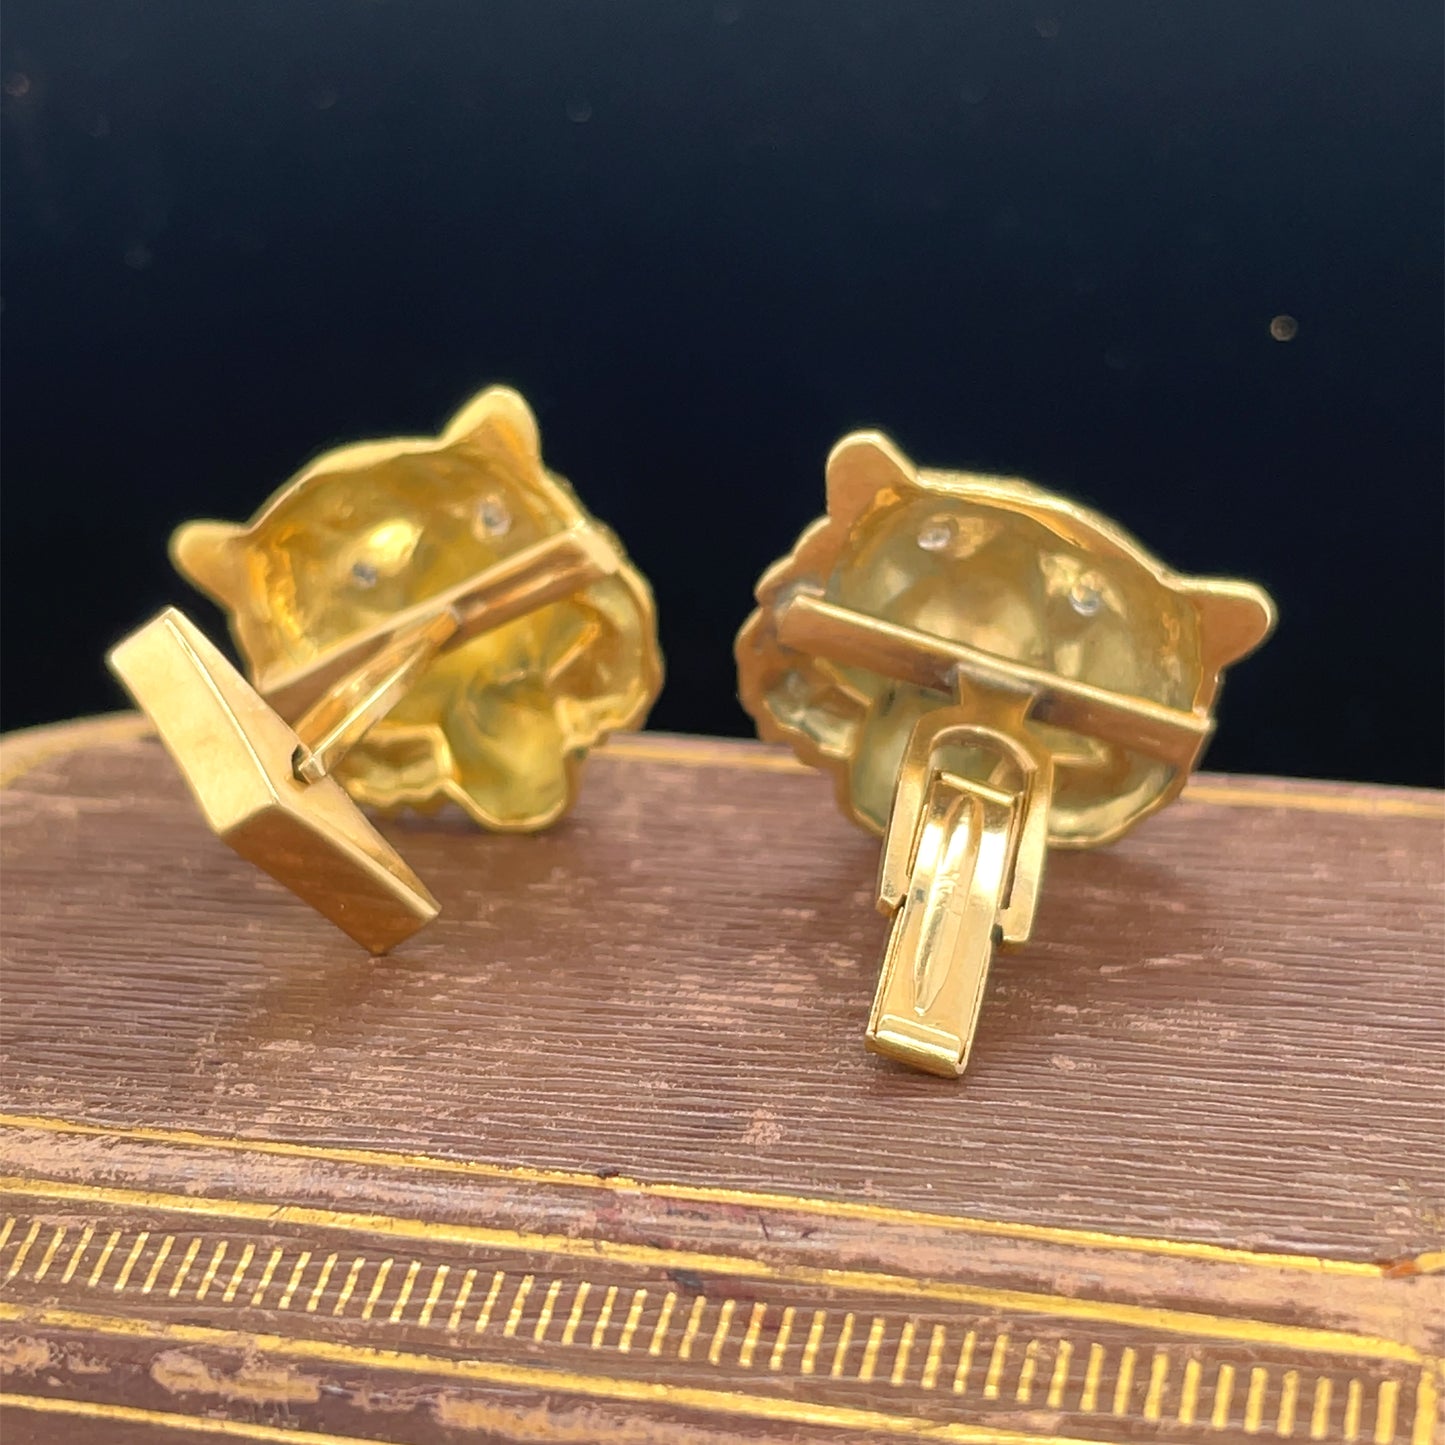 Vintage 14K Yellow Gold & Diamond Lion Cufflinks